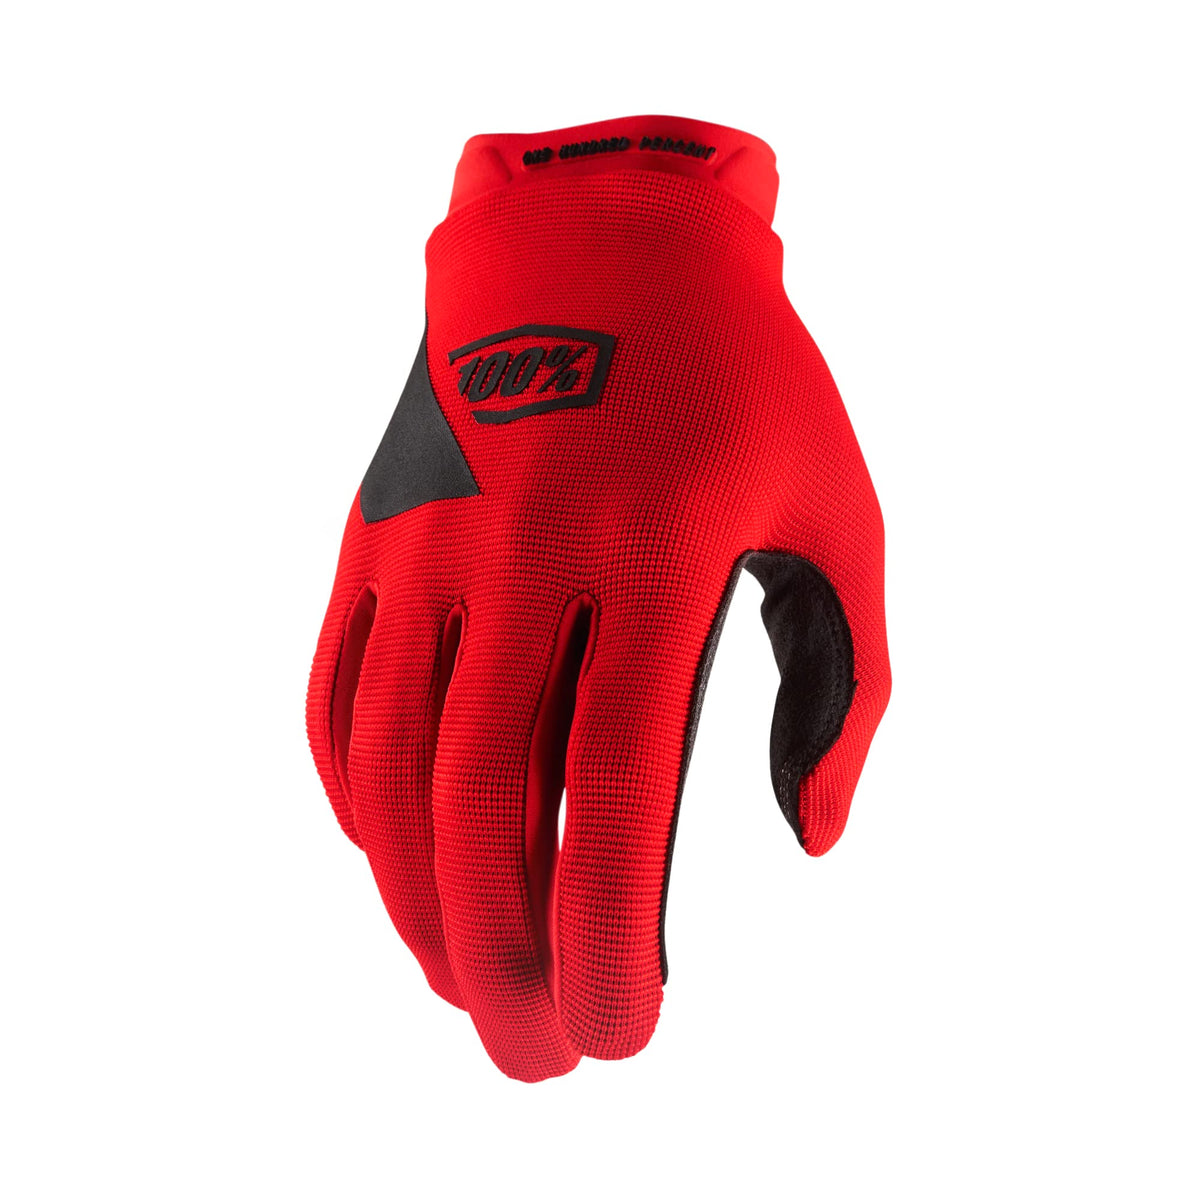 100% RIDECAMP Youth Motocross &amp; Mountain Biking Gloves - Lightweight MTB &amp; Dirt Bike Riding Protective Gear